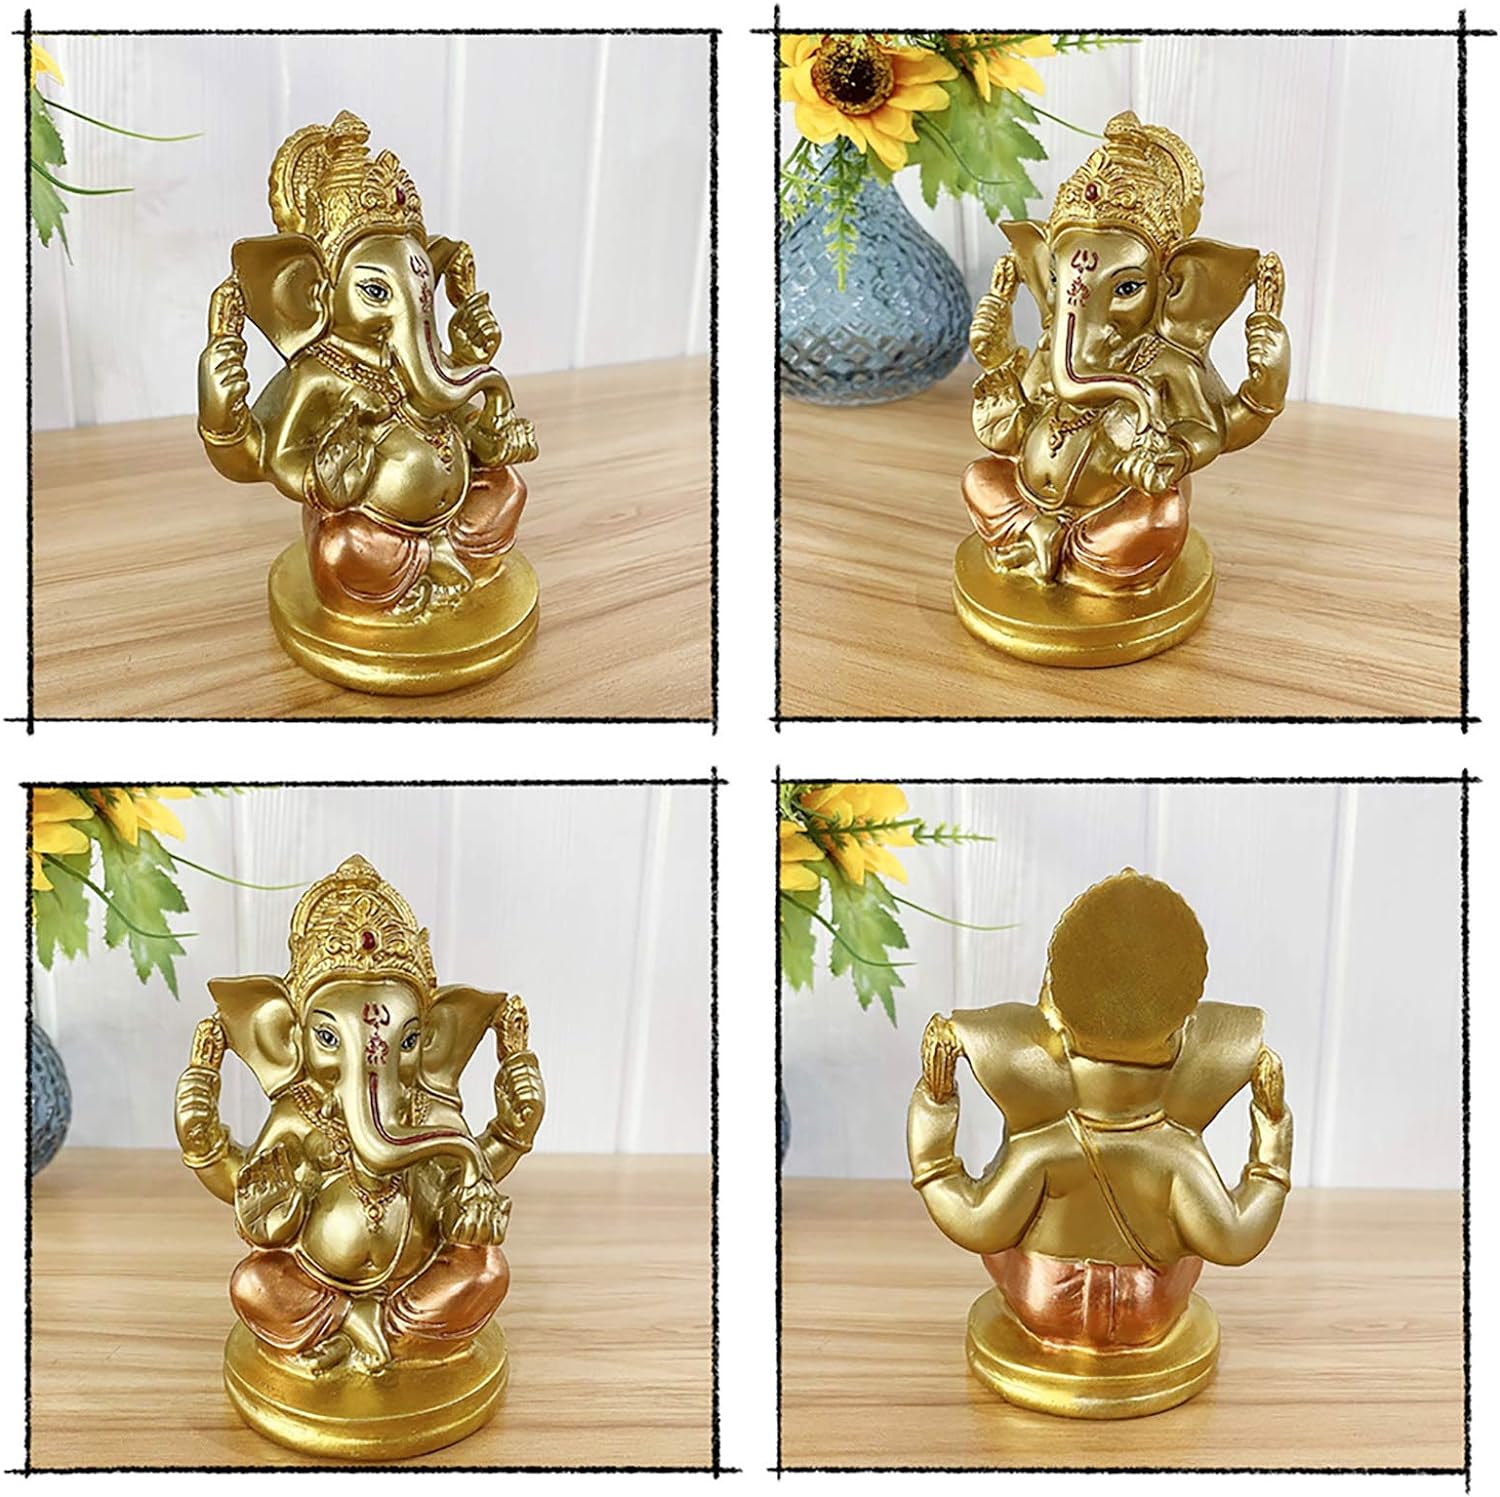 BangBangDa Hindu Lord Ganesha Statue - Indian Elephant God Murti Decor Hand Painting Figurines Idol Wedding Return Gifts Home Mandir Pooja Item Altar Yoga Room Decor